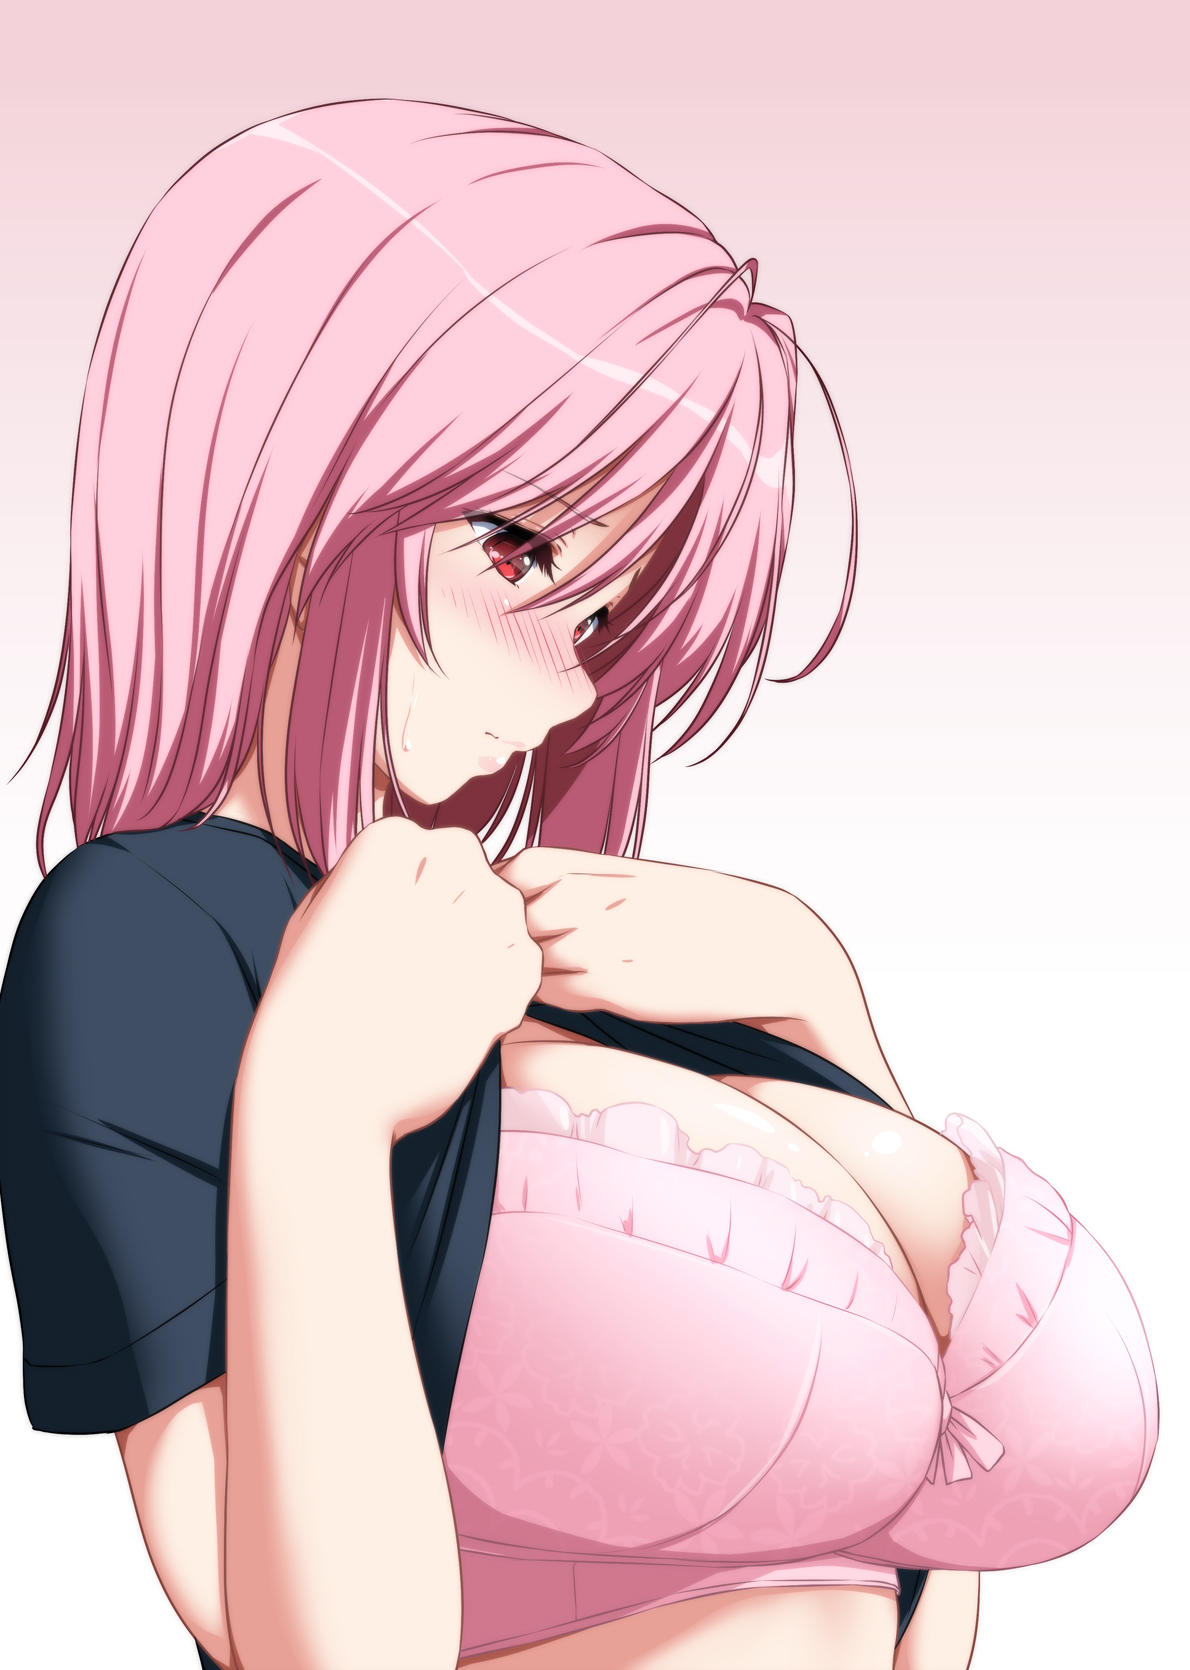 Anime 1190x1670 anime anime girls big boobs Touhou Saigyouji Yuyuko lifting shirt bra cleavage